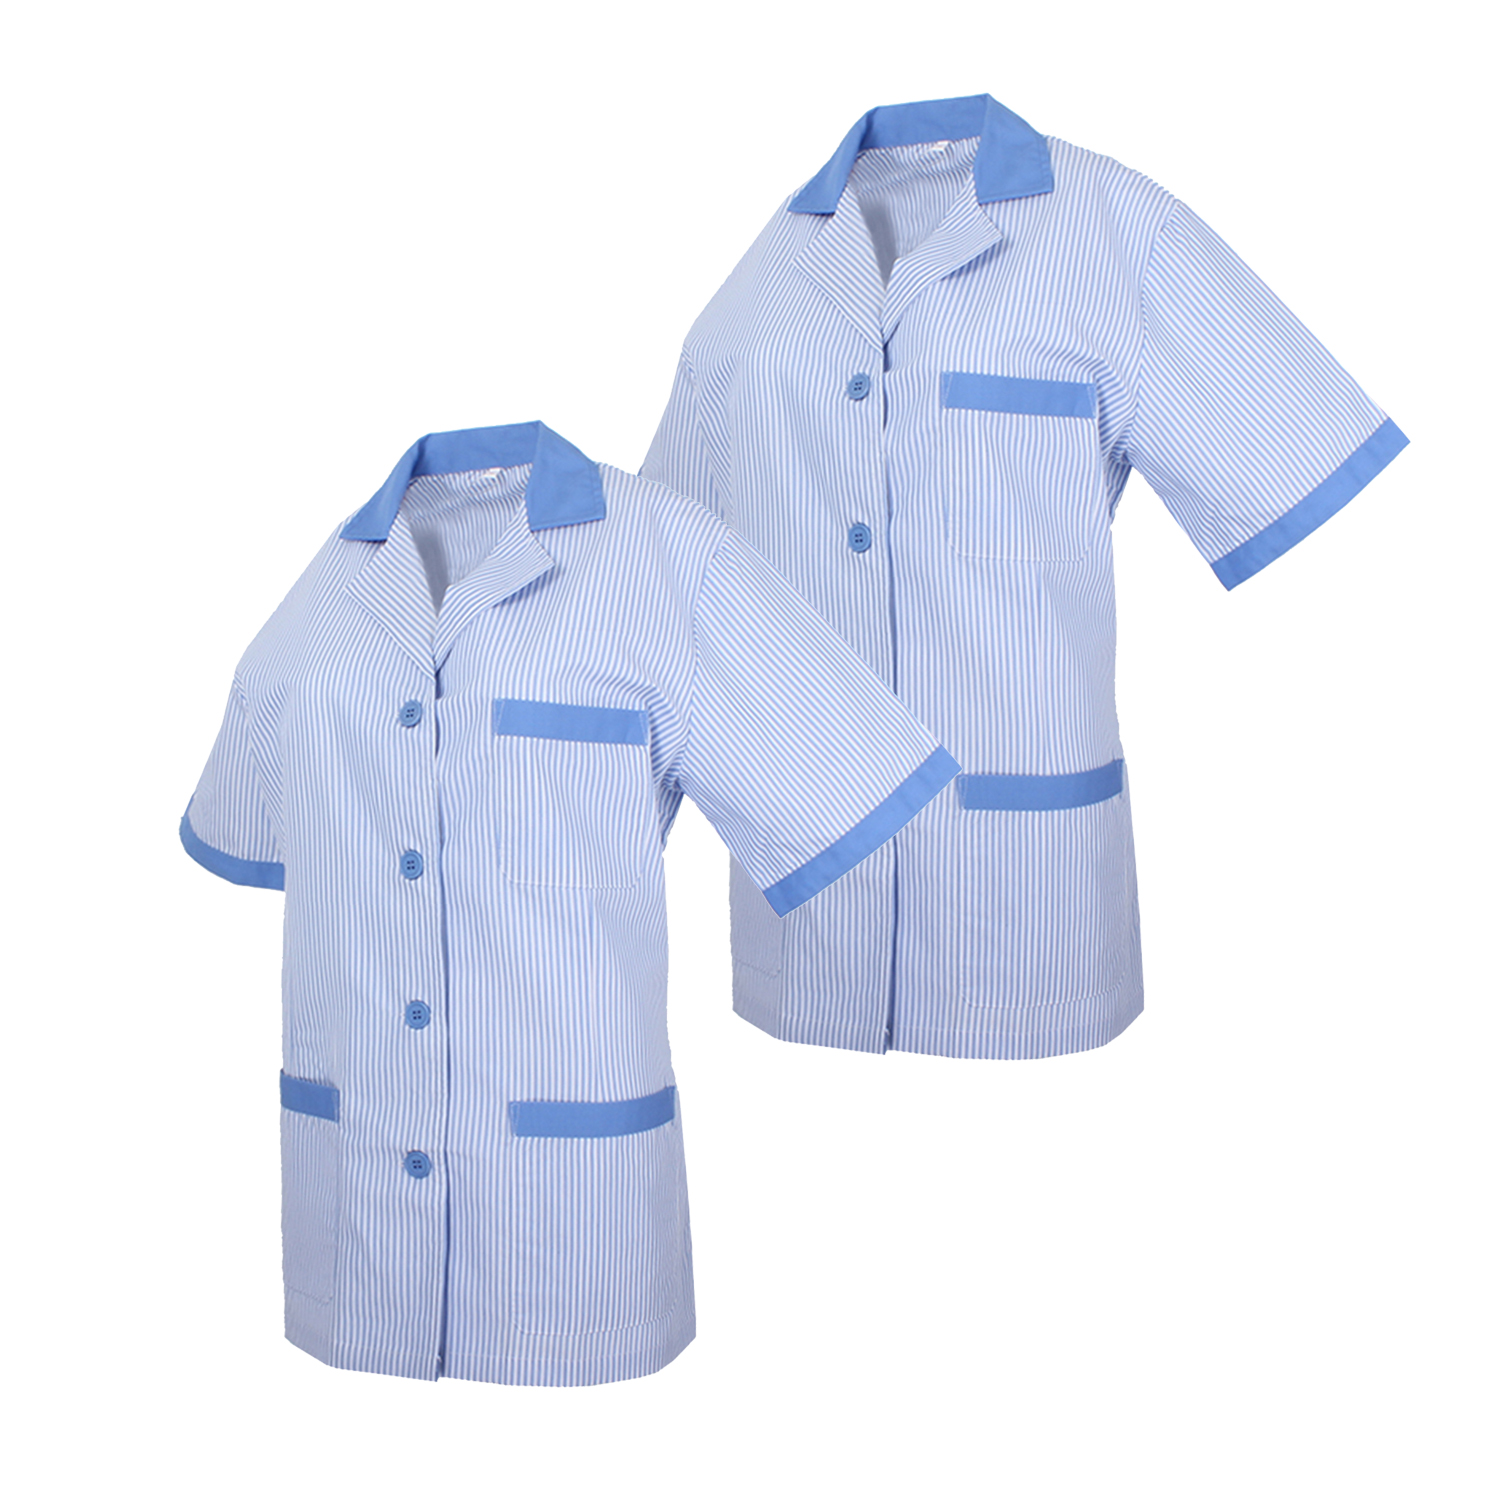 MISEMIYA Pack*2-Camisa Camisetas Mujer Medica Mangas Cortas Uniforme Laboral Sanitarios Hospital Limpieza Ref.T820